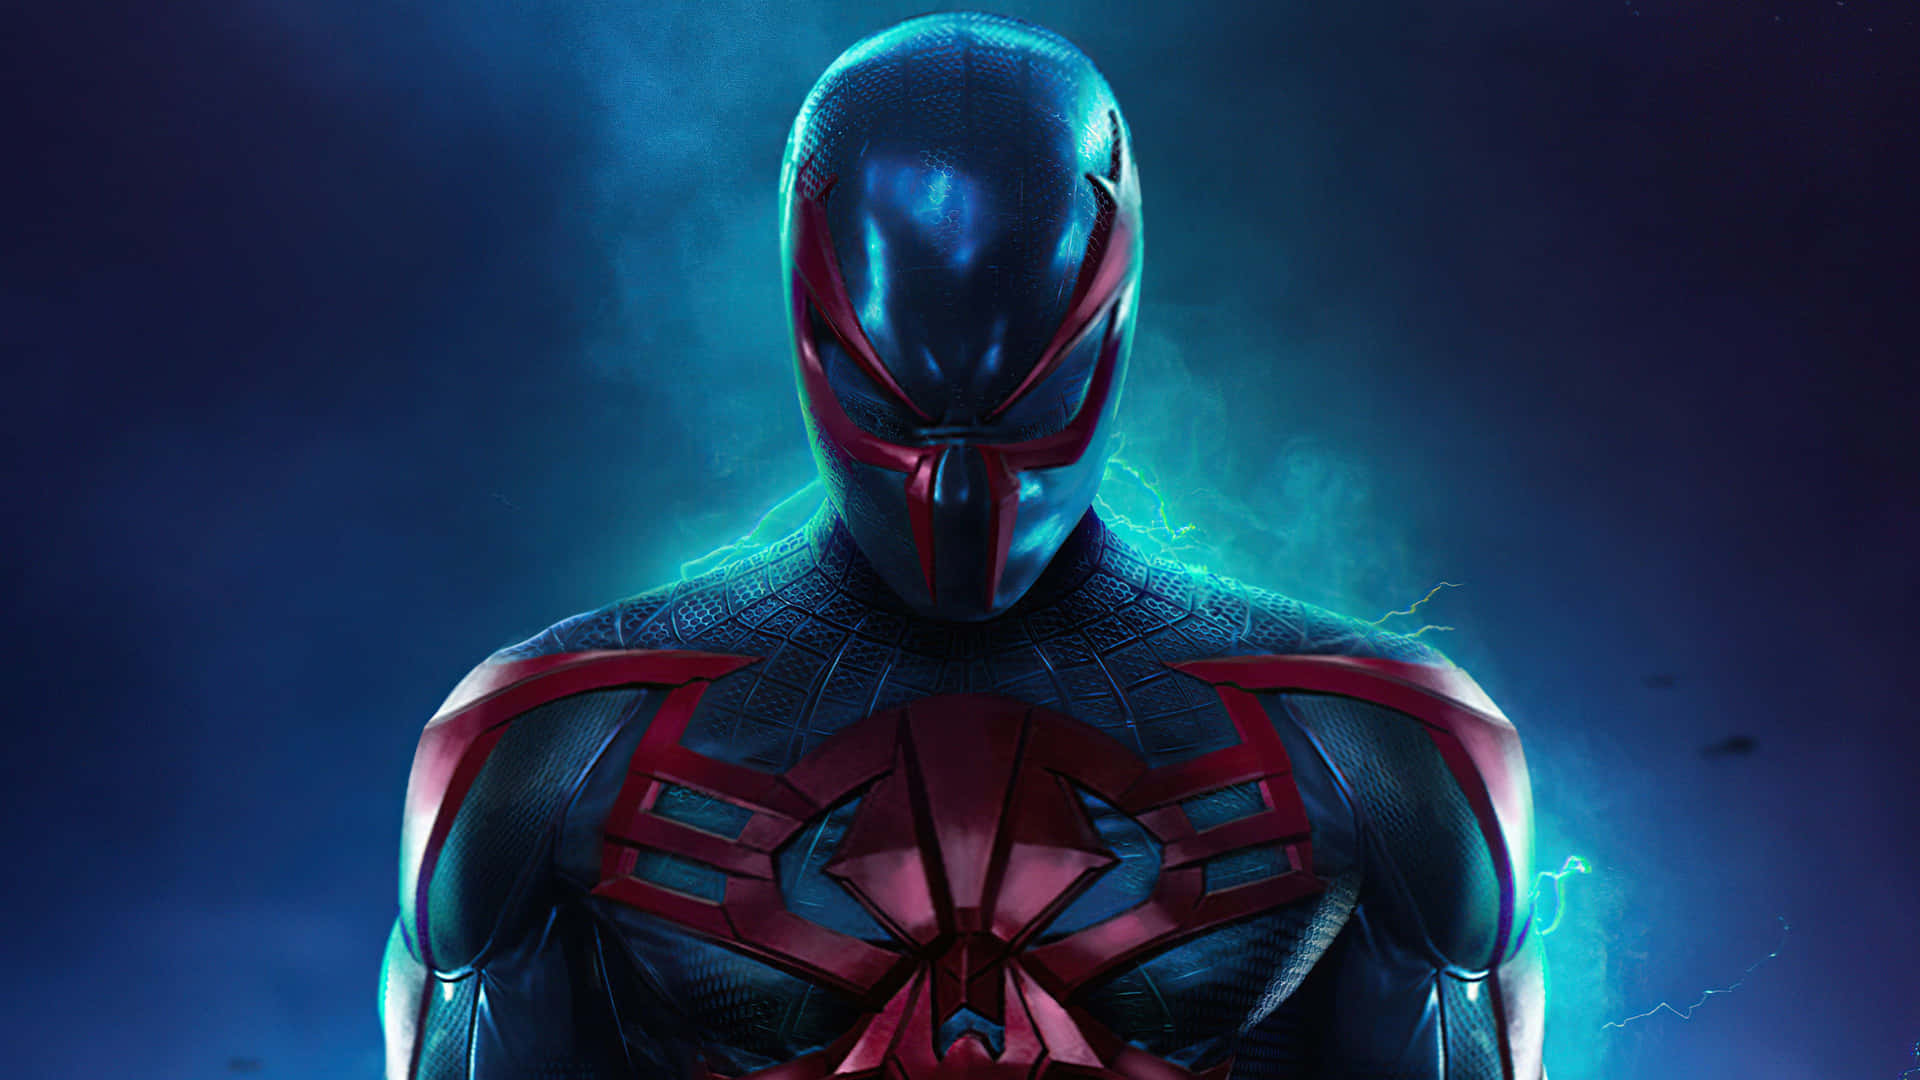 Spiderman Profilbild 2099 Wallpaper